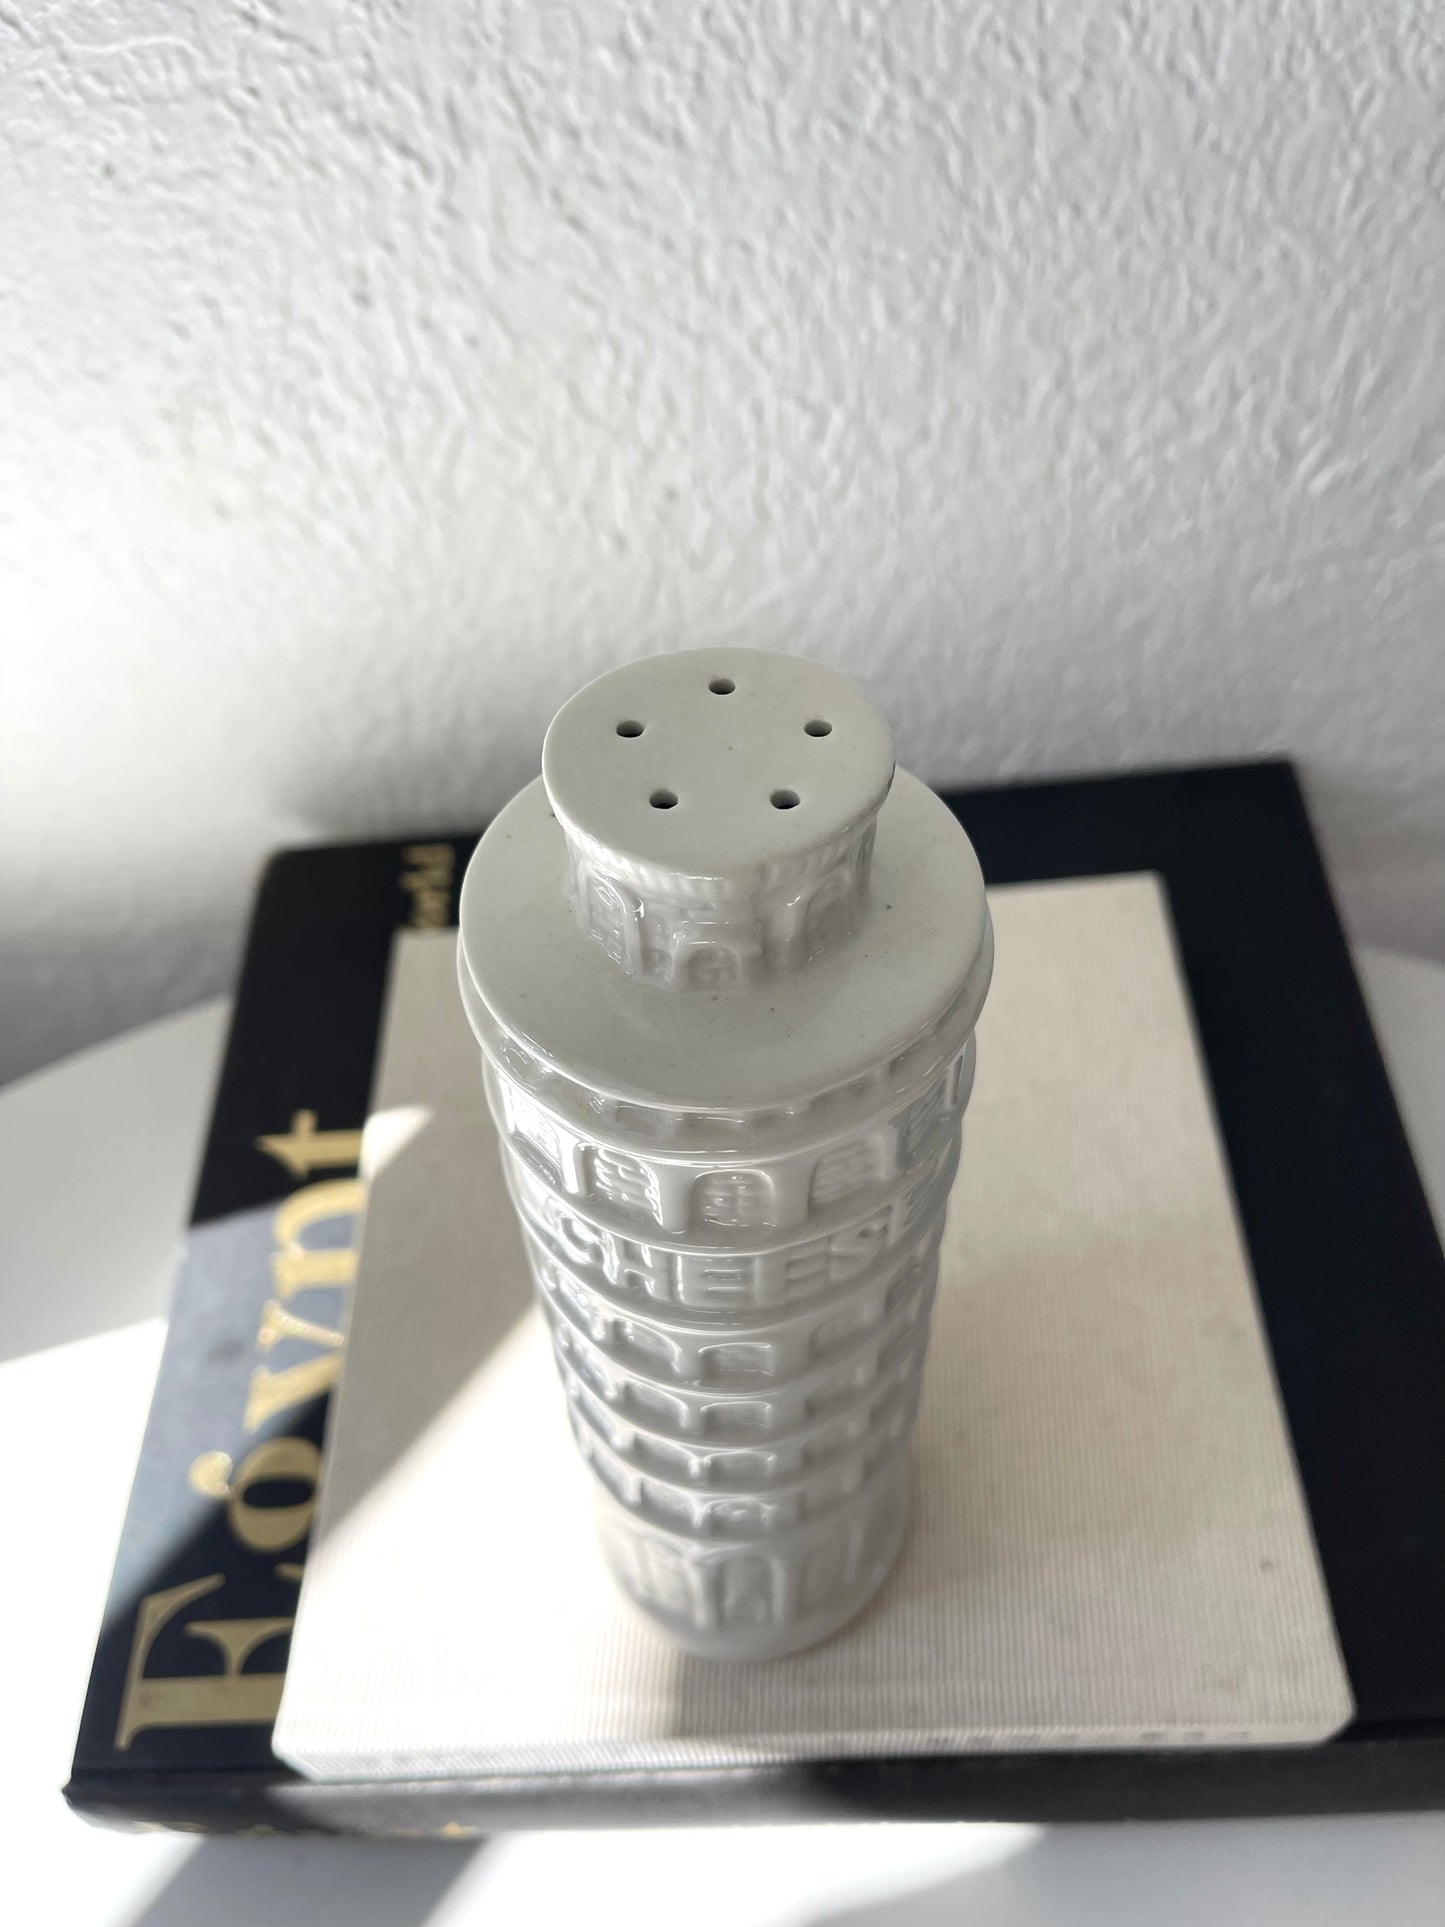 Leaning tower of Pisa | glazed white ceramic Parmesan cheese shaker